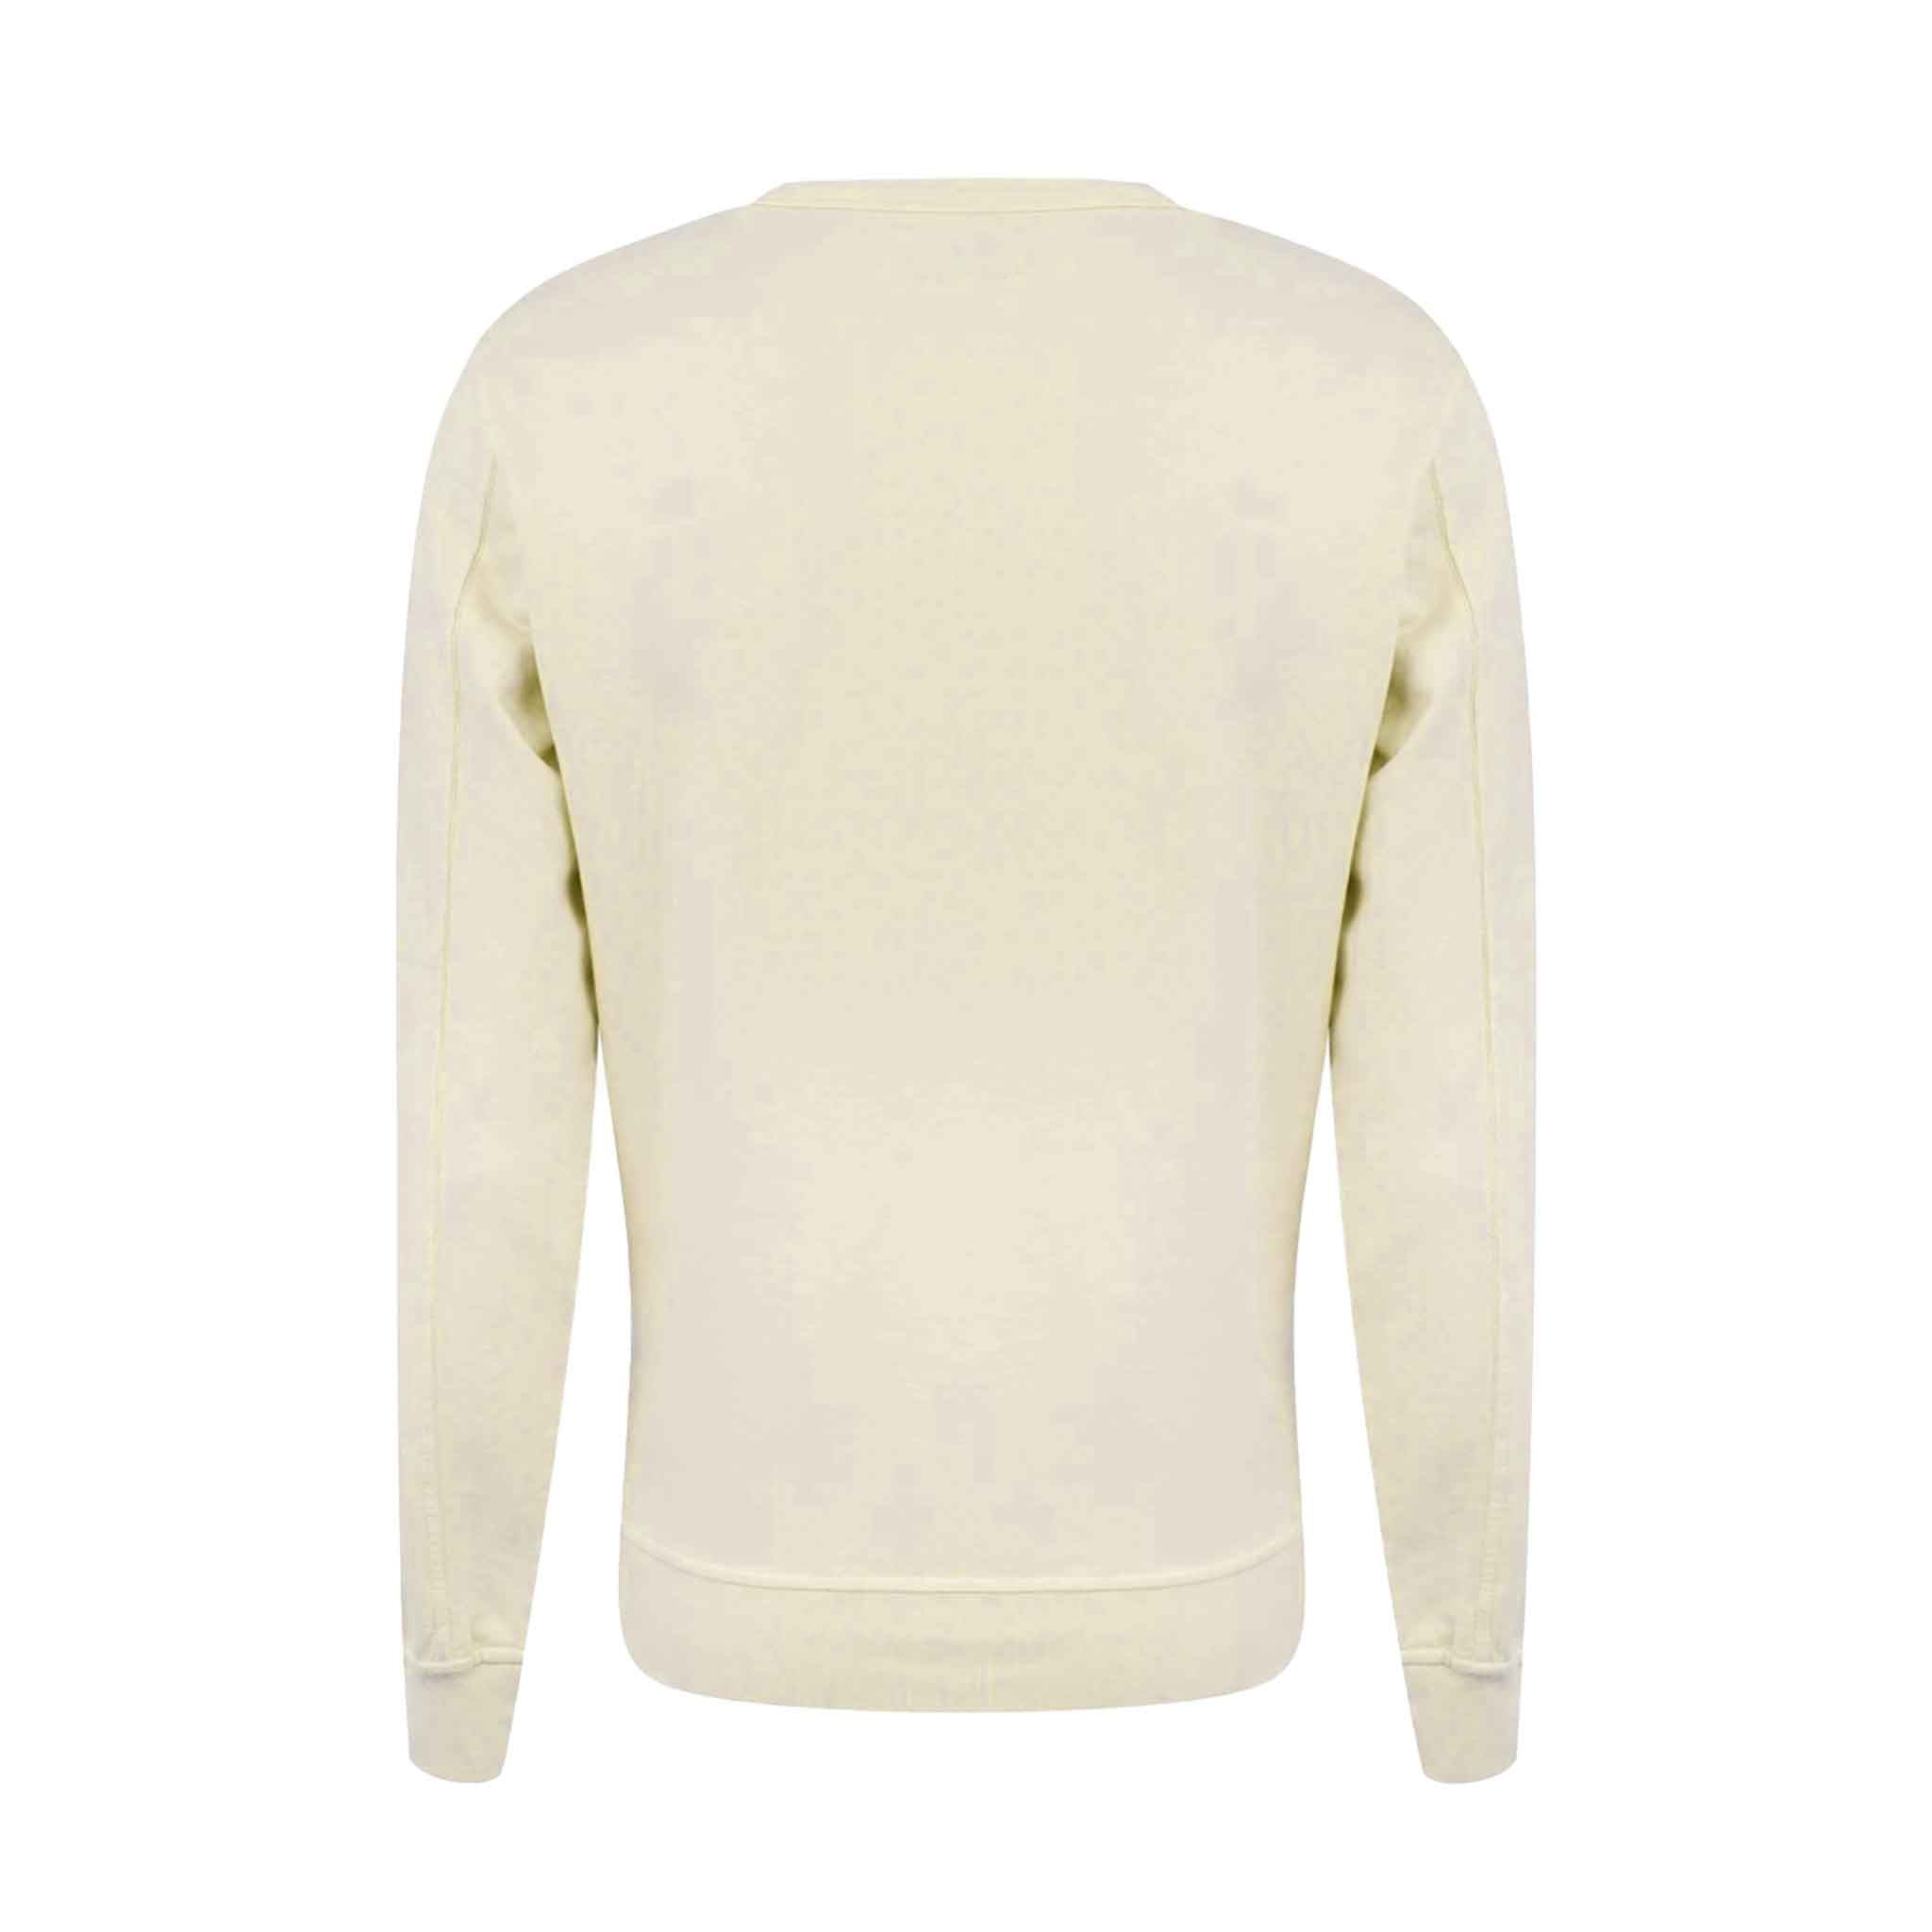 C.P. Company Light Fleece Sweatshirt in Pistachio Shell